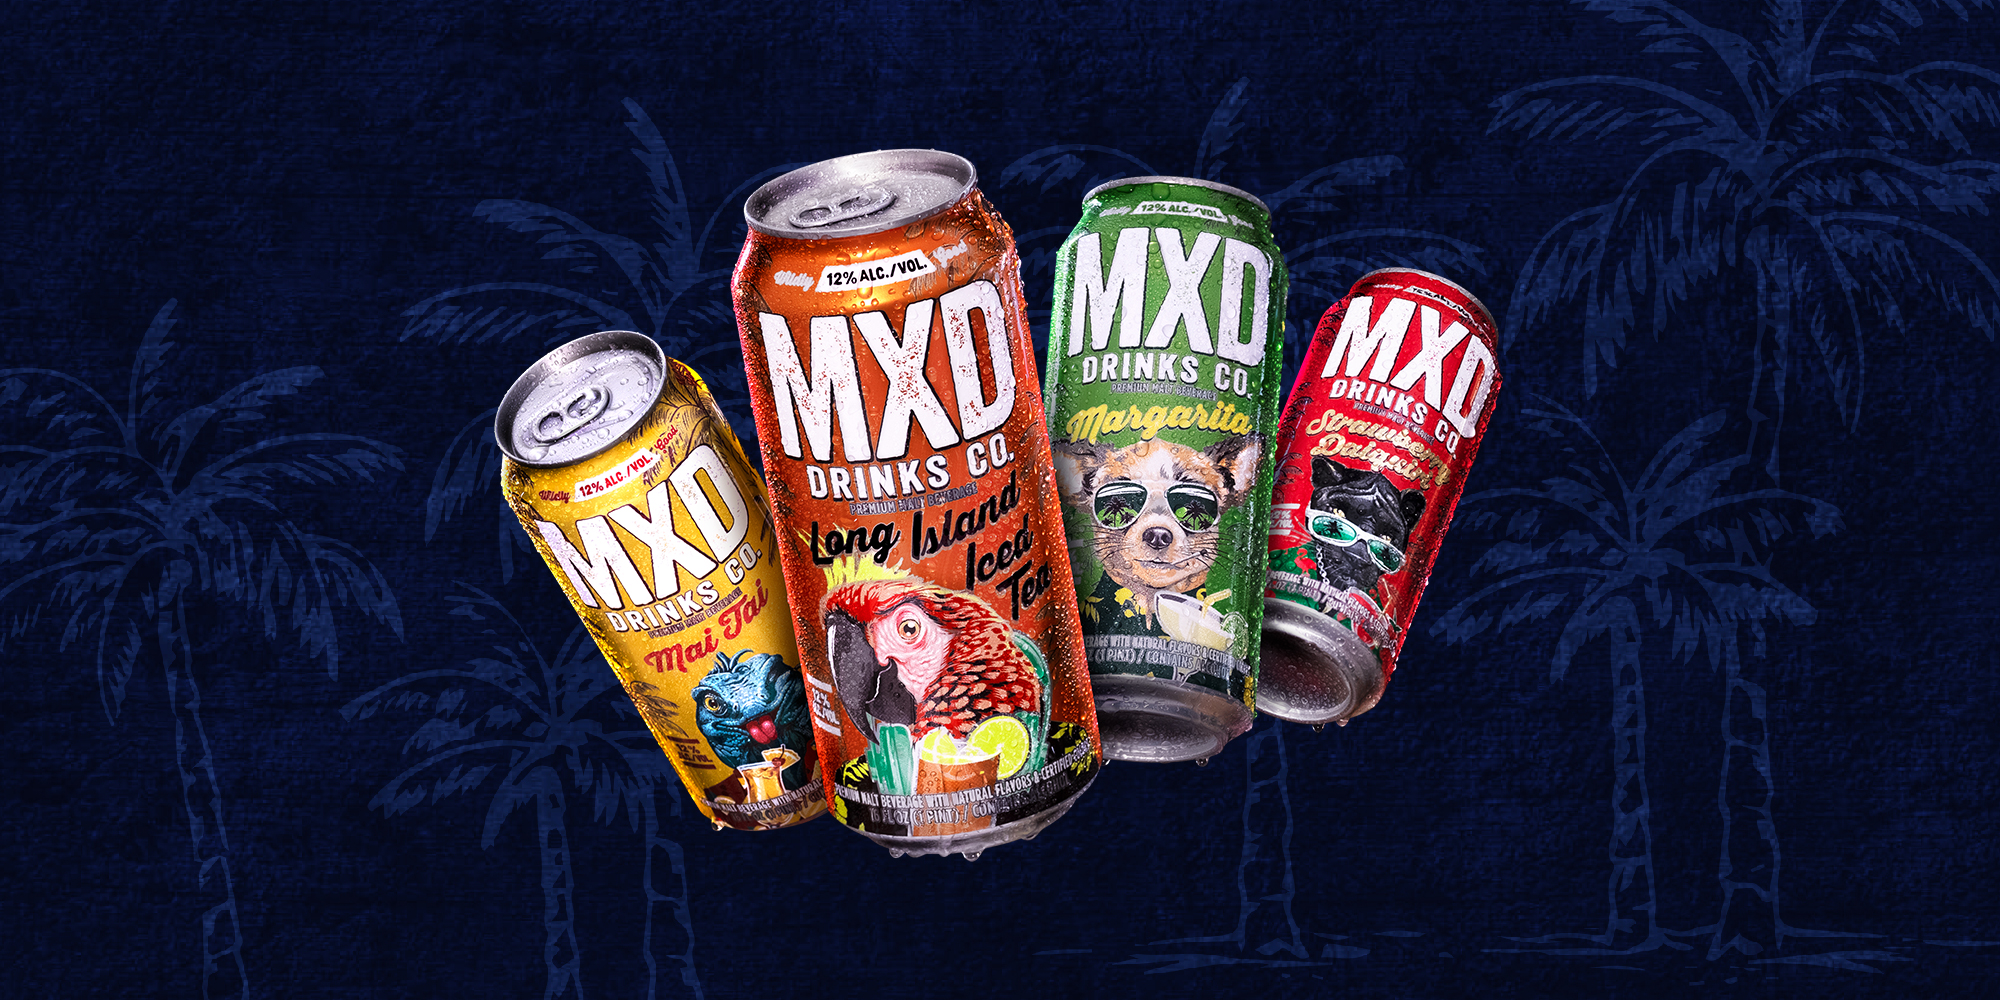 MXD Drinks Co.